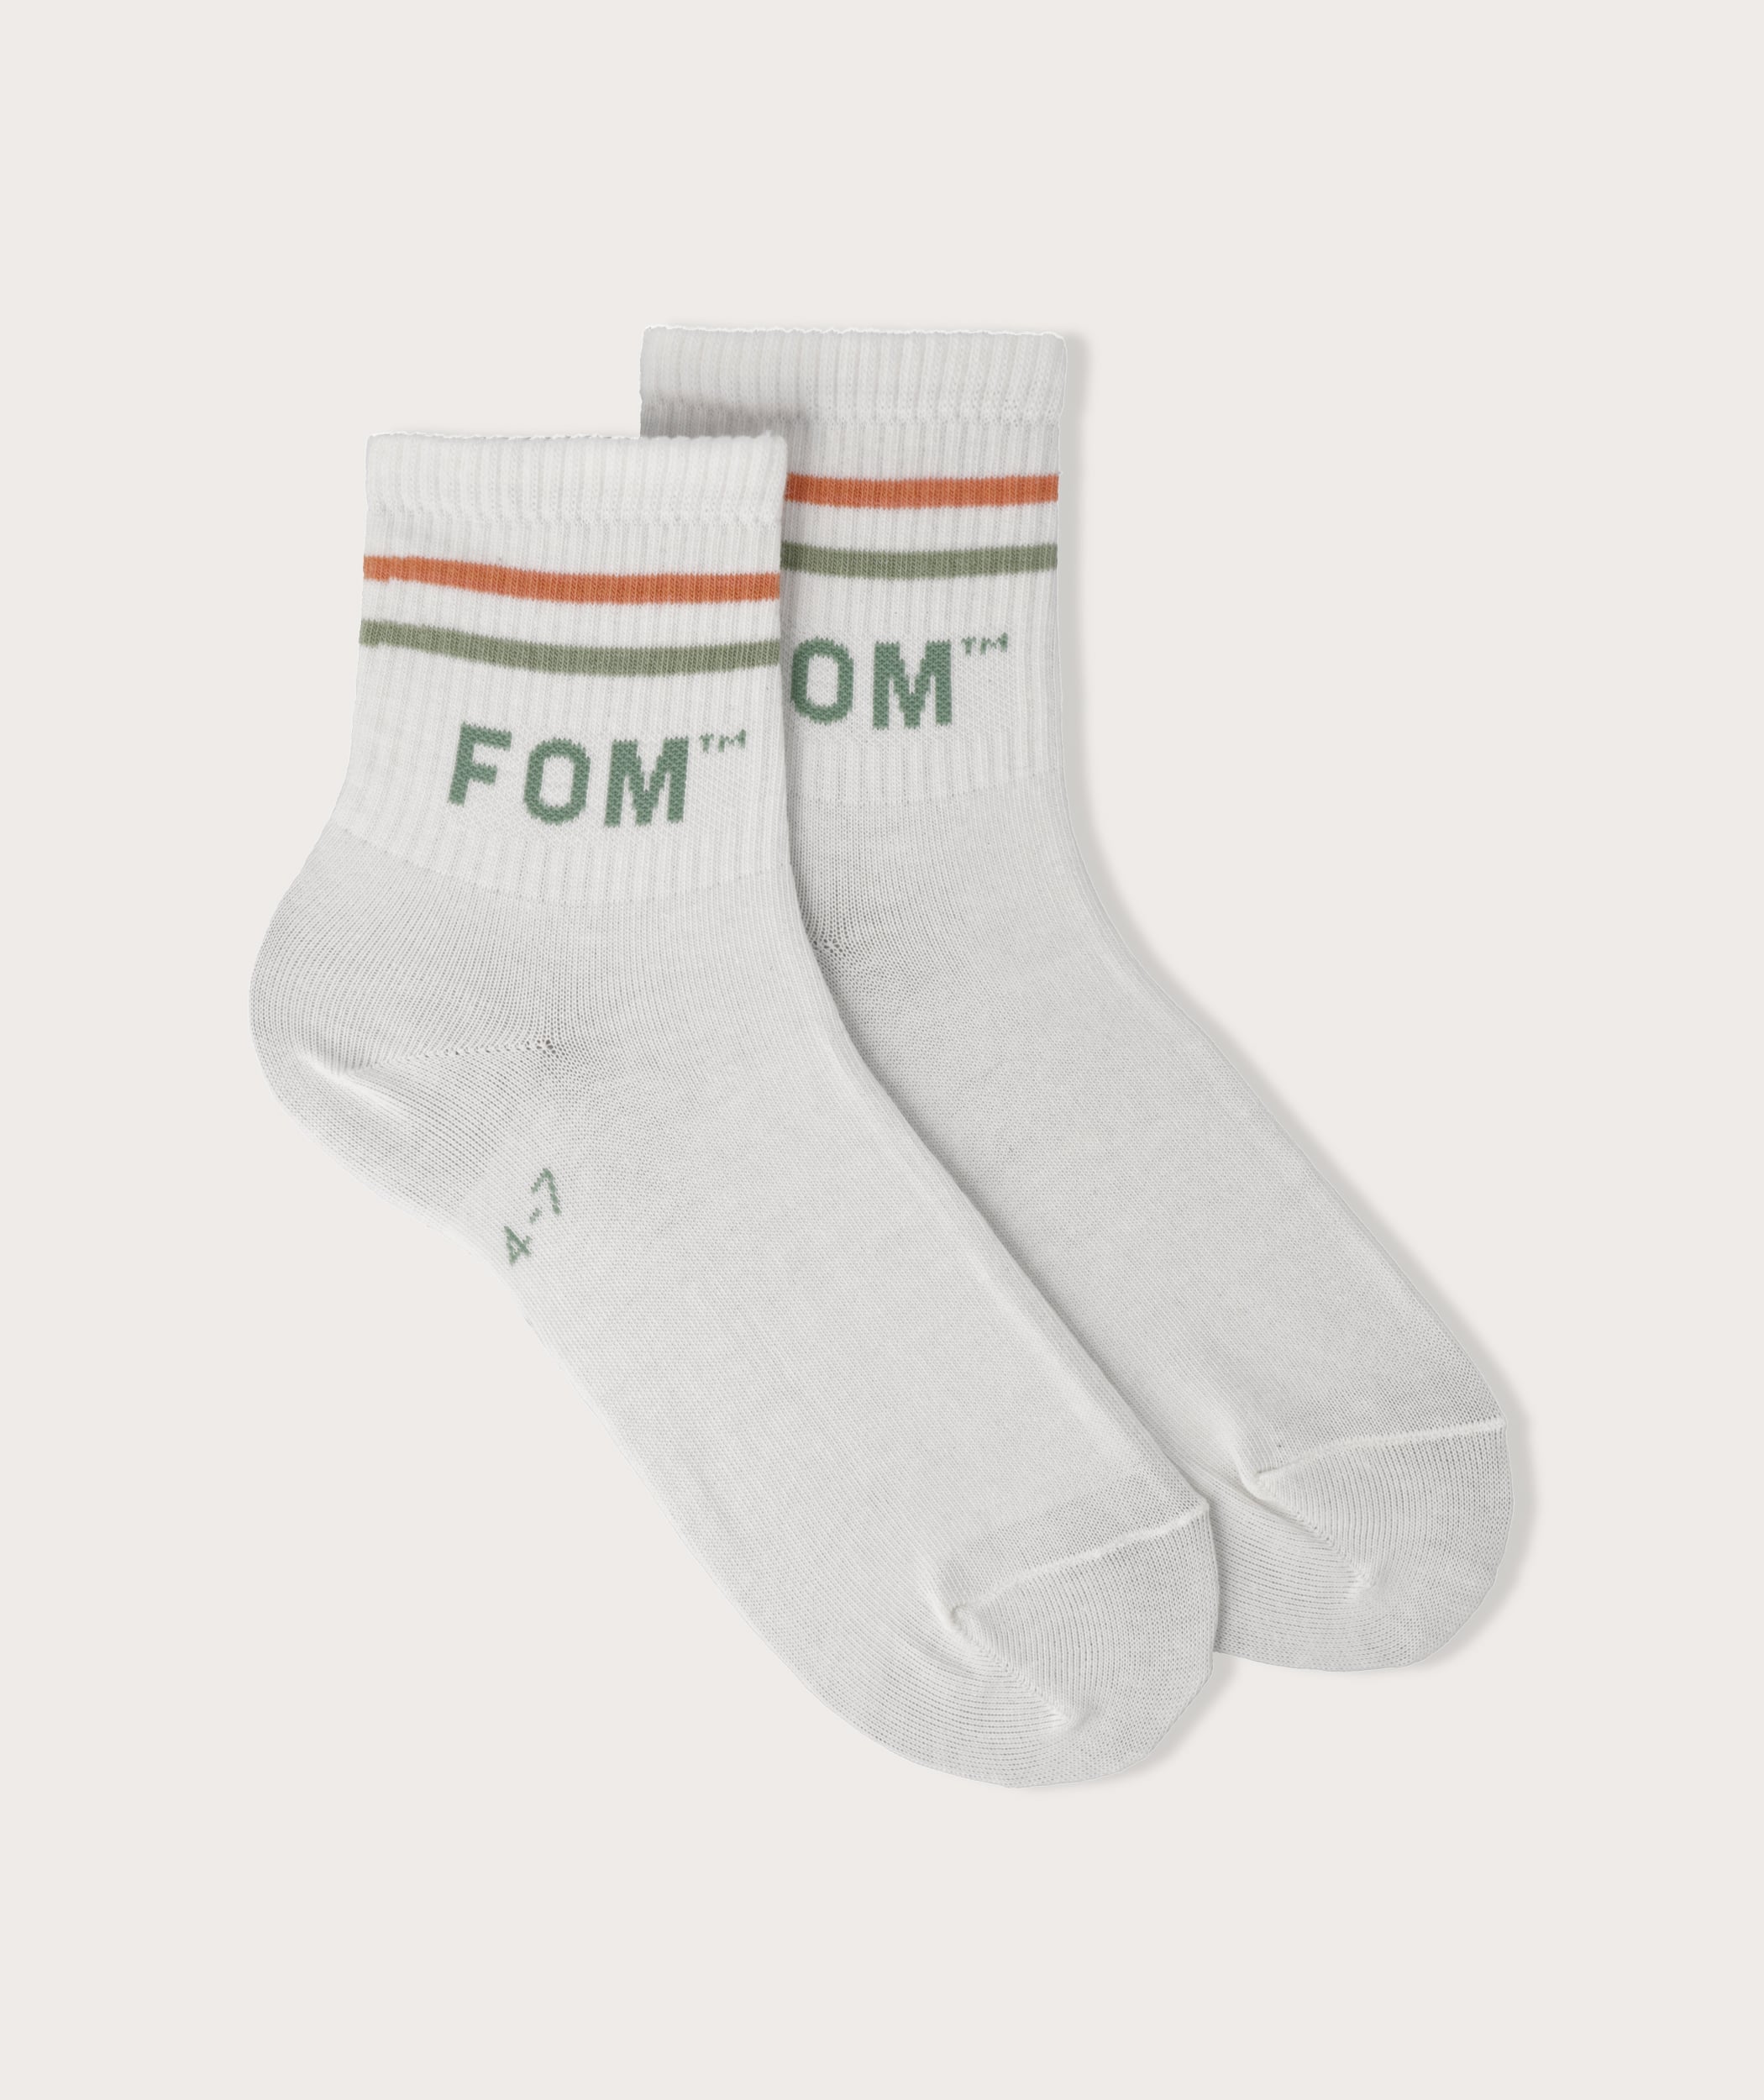 Socks FOM Active Beige/ Peach & Lime Stripes (Size 4-7)